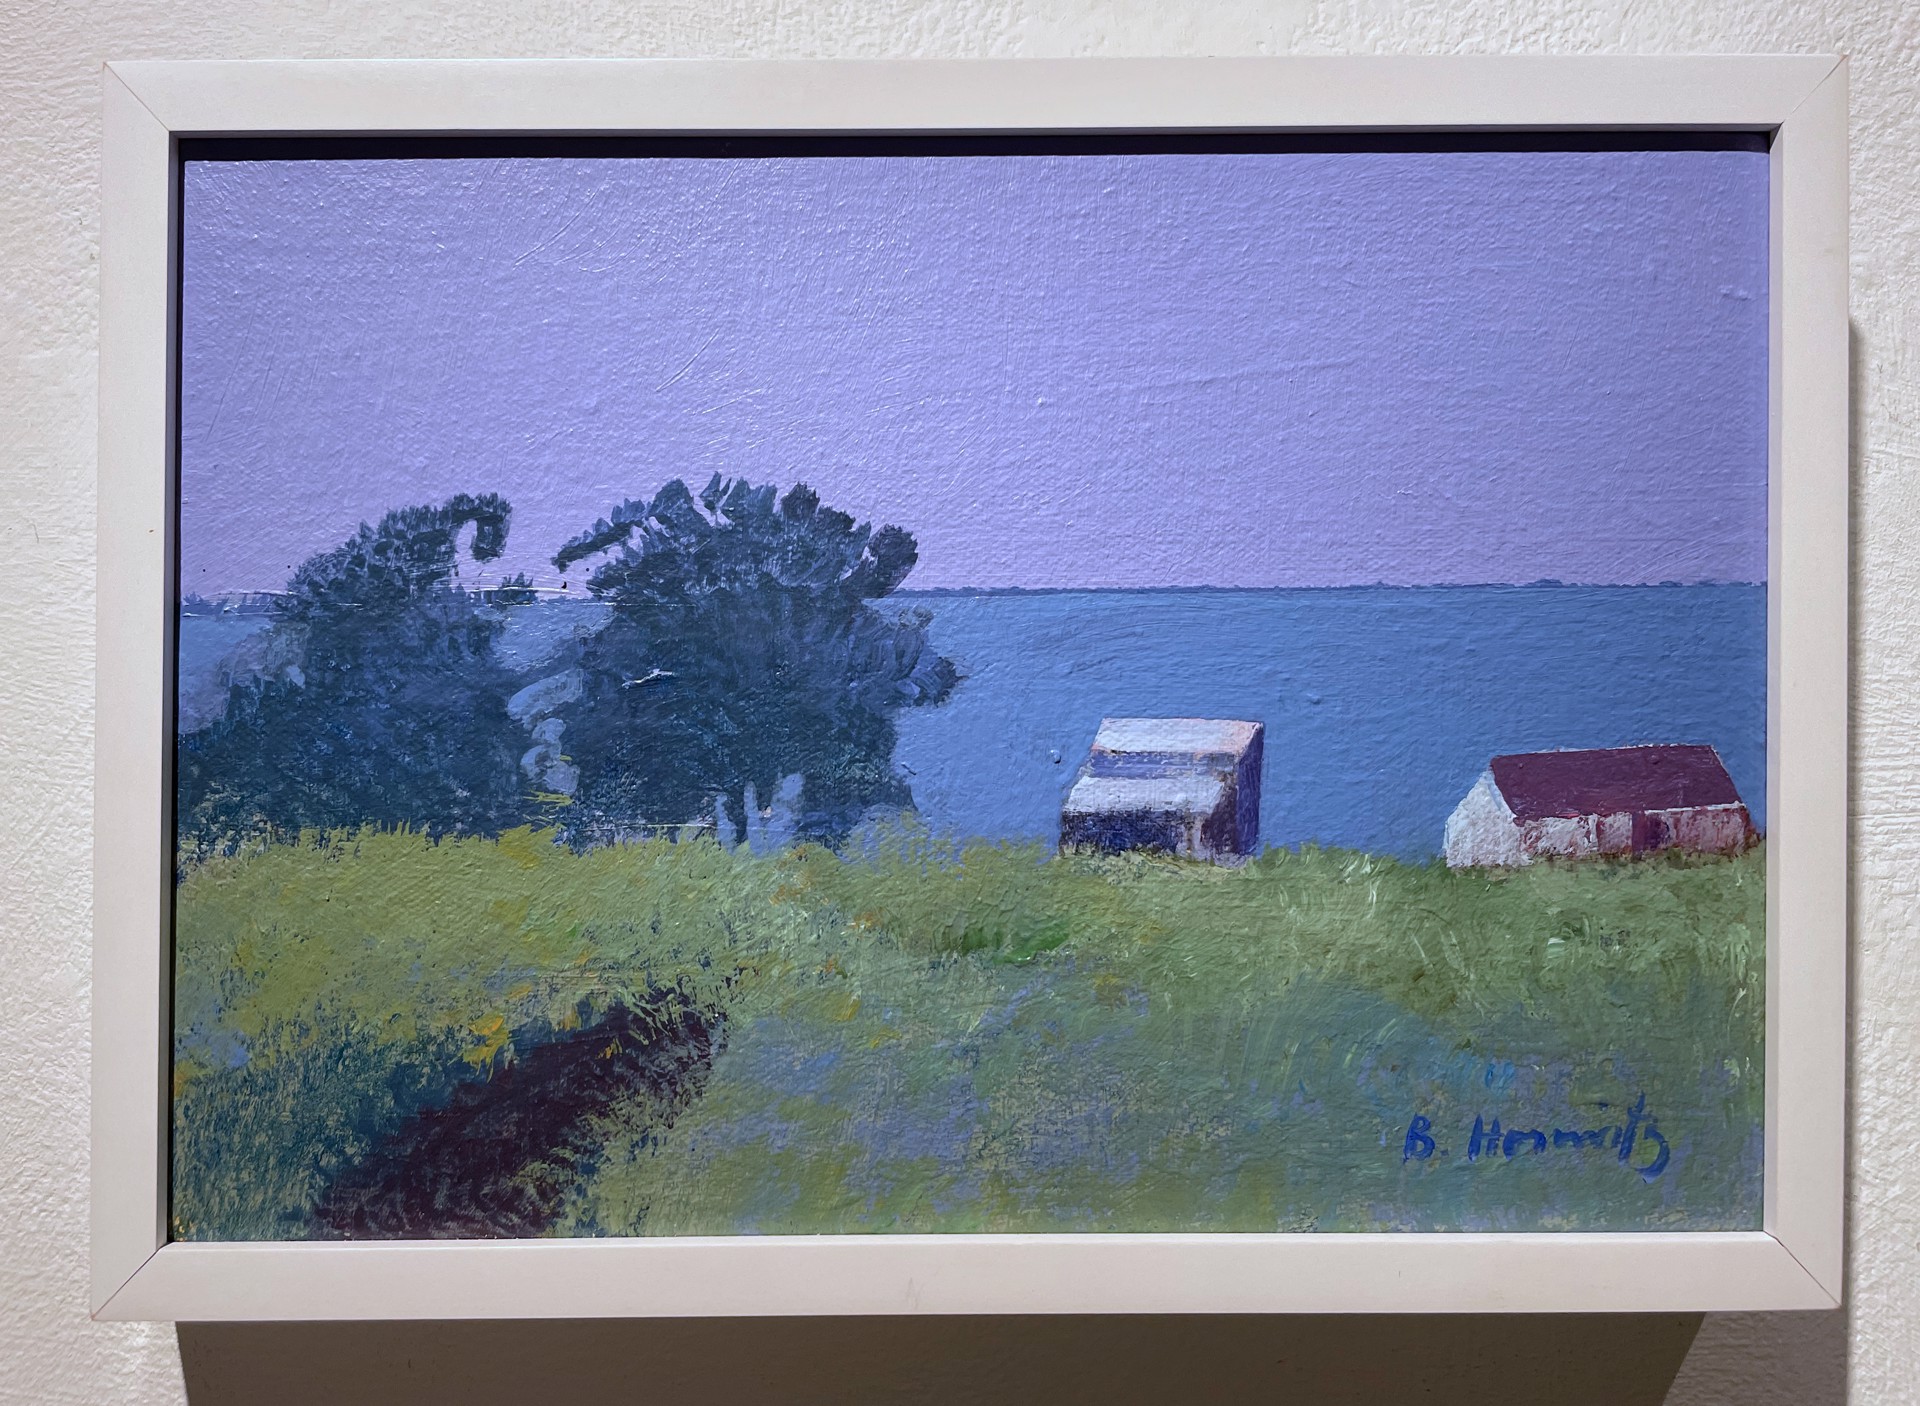 Bay Blue by Brenda Horowitz